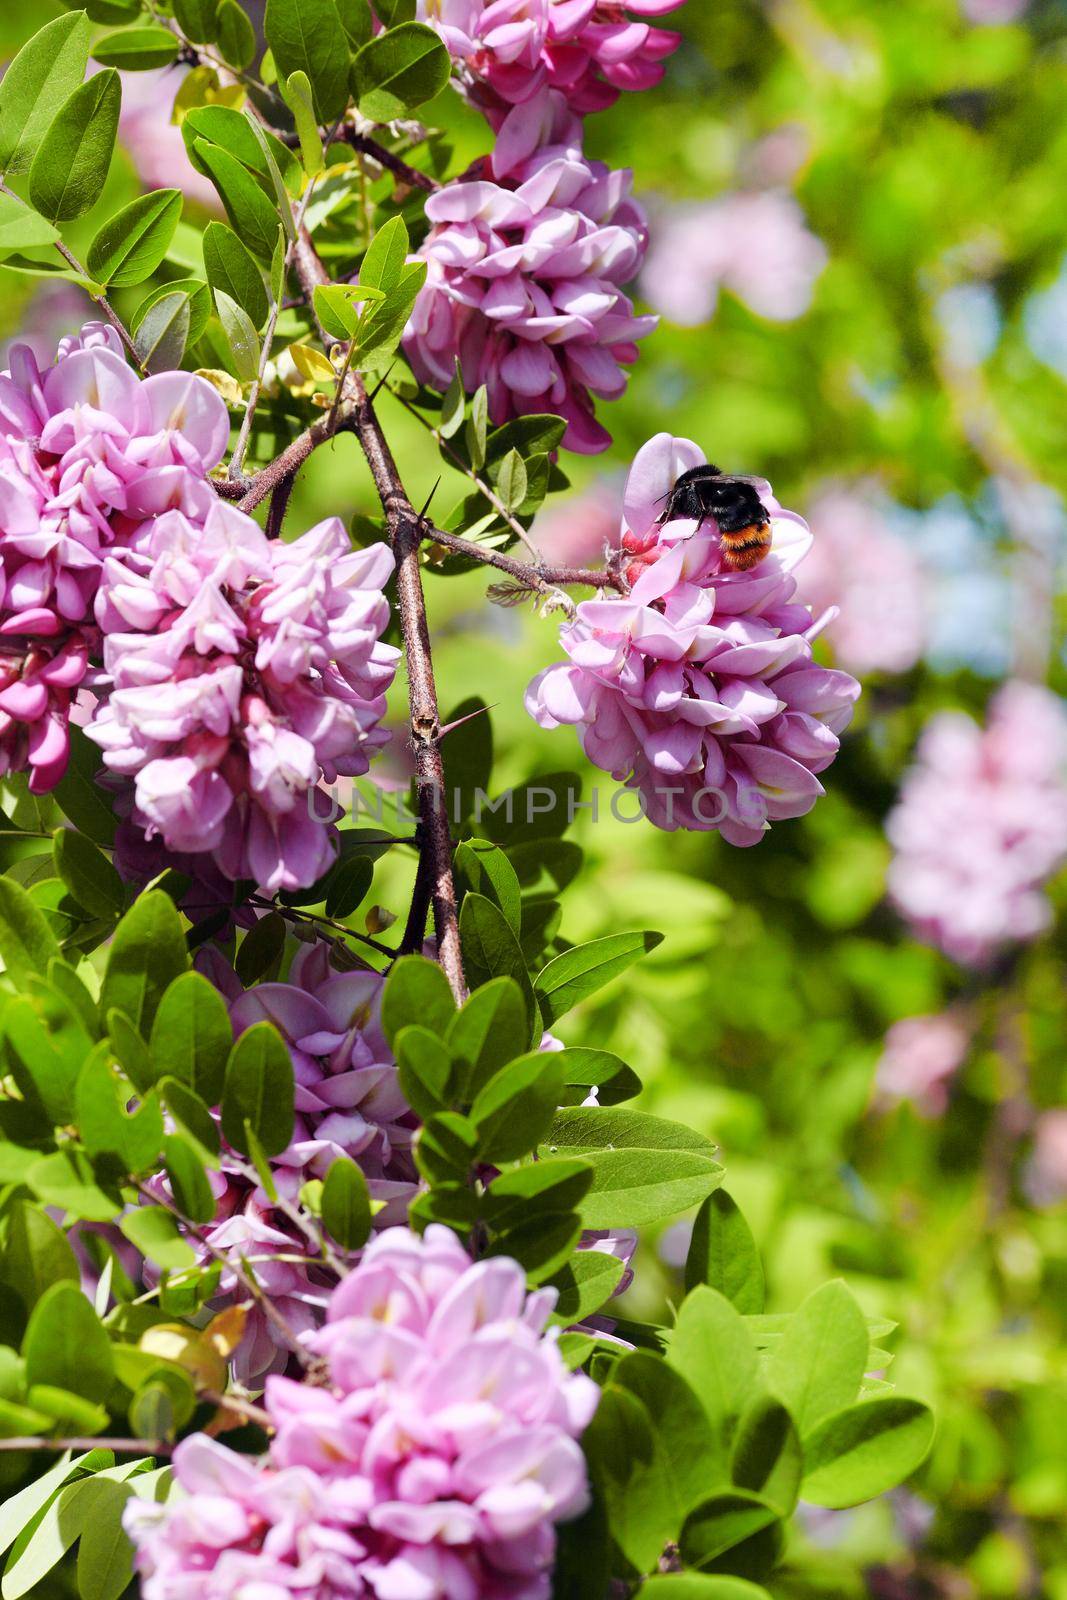 Bee on acacia flower